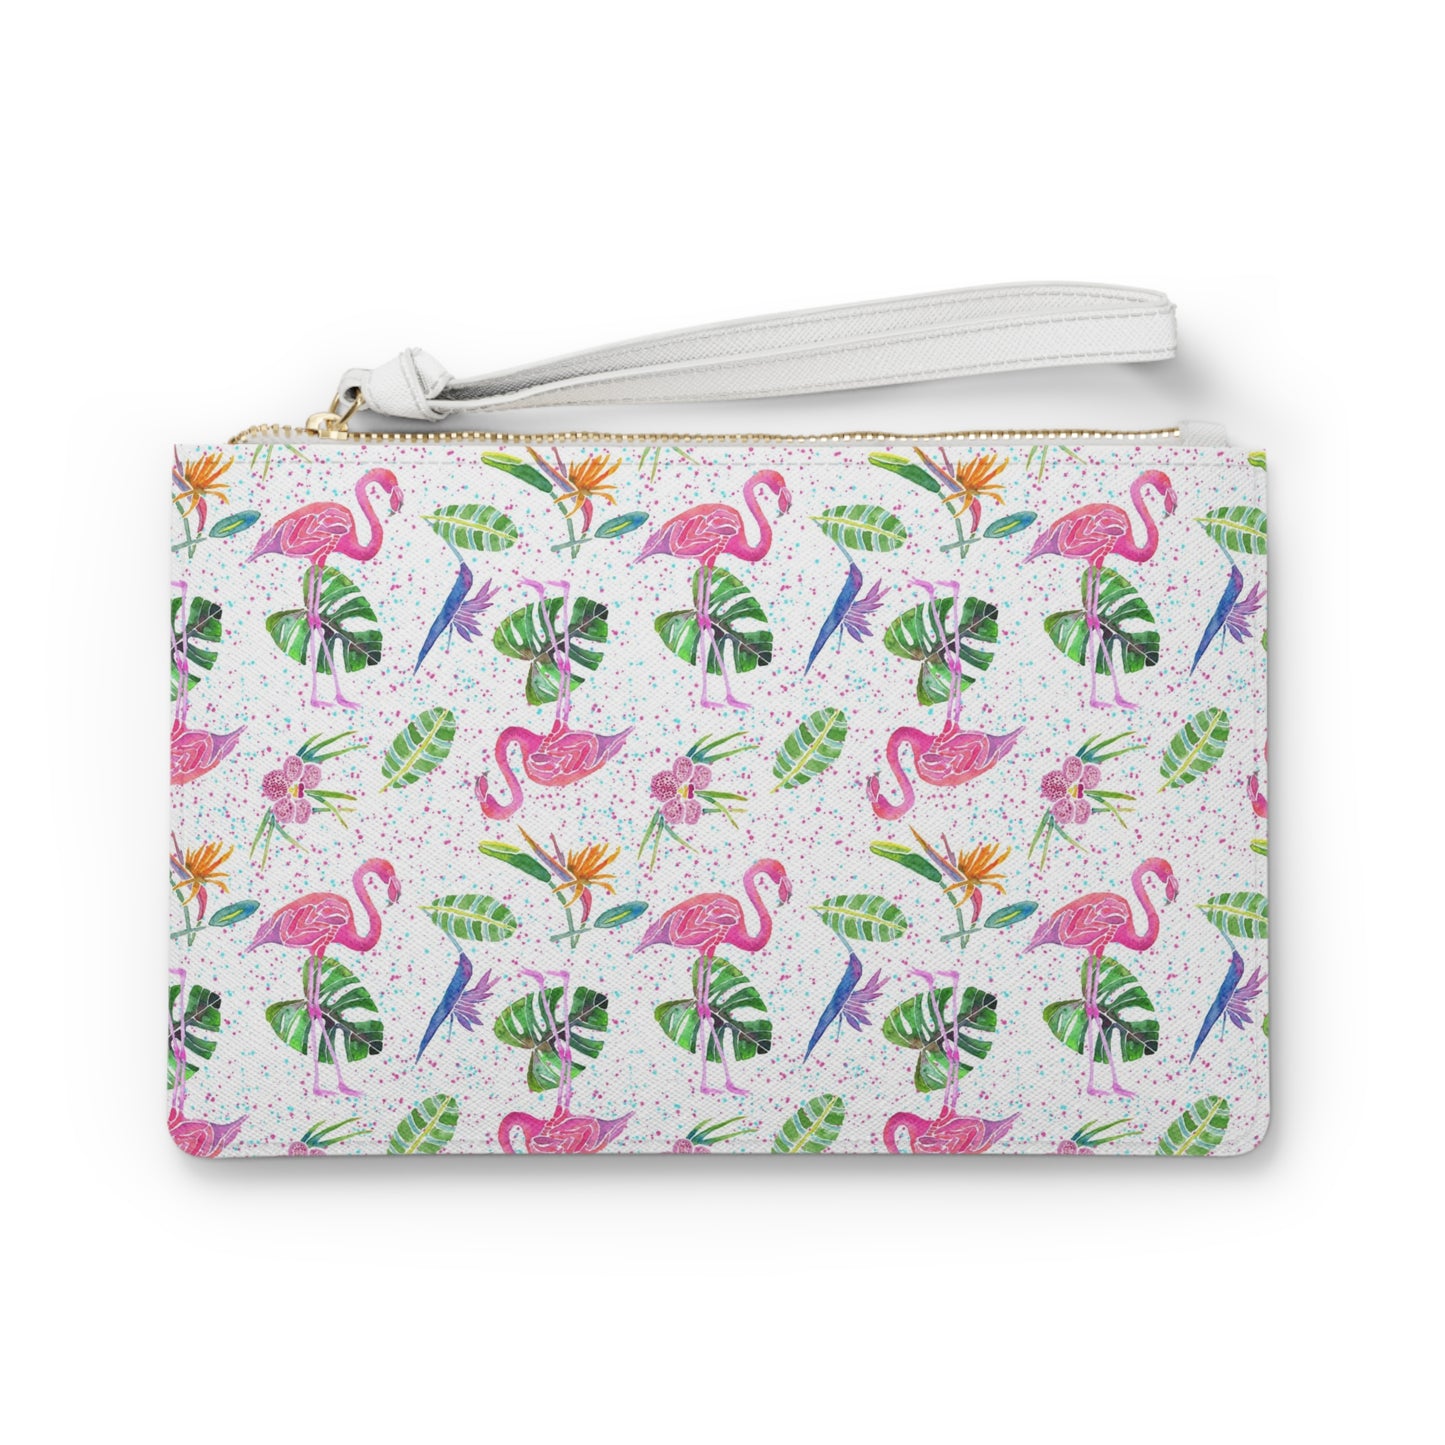 Flamingo Party Clutch Bag